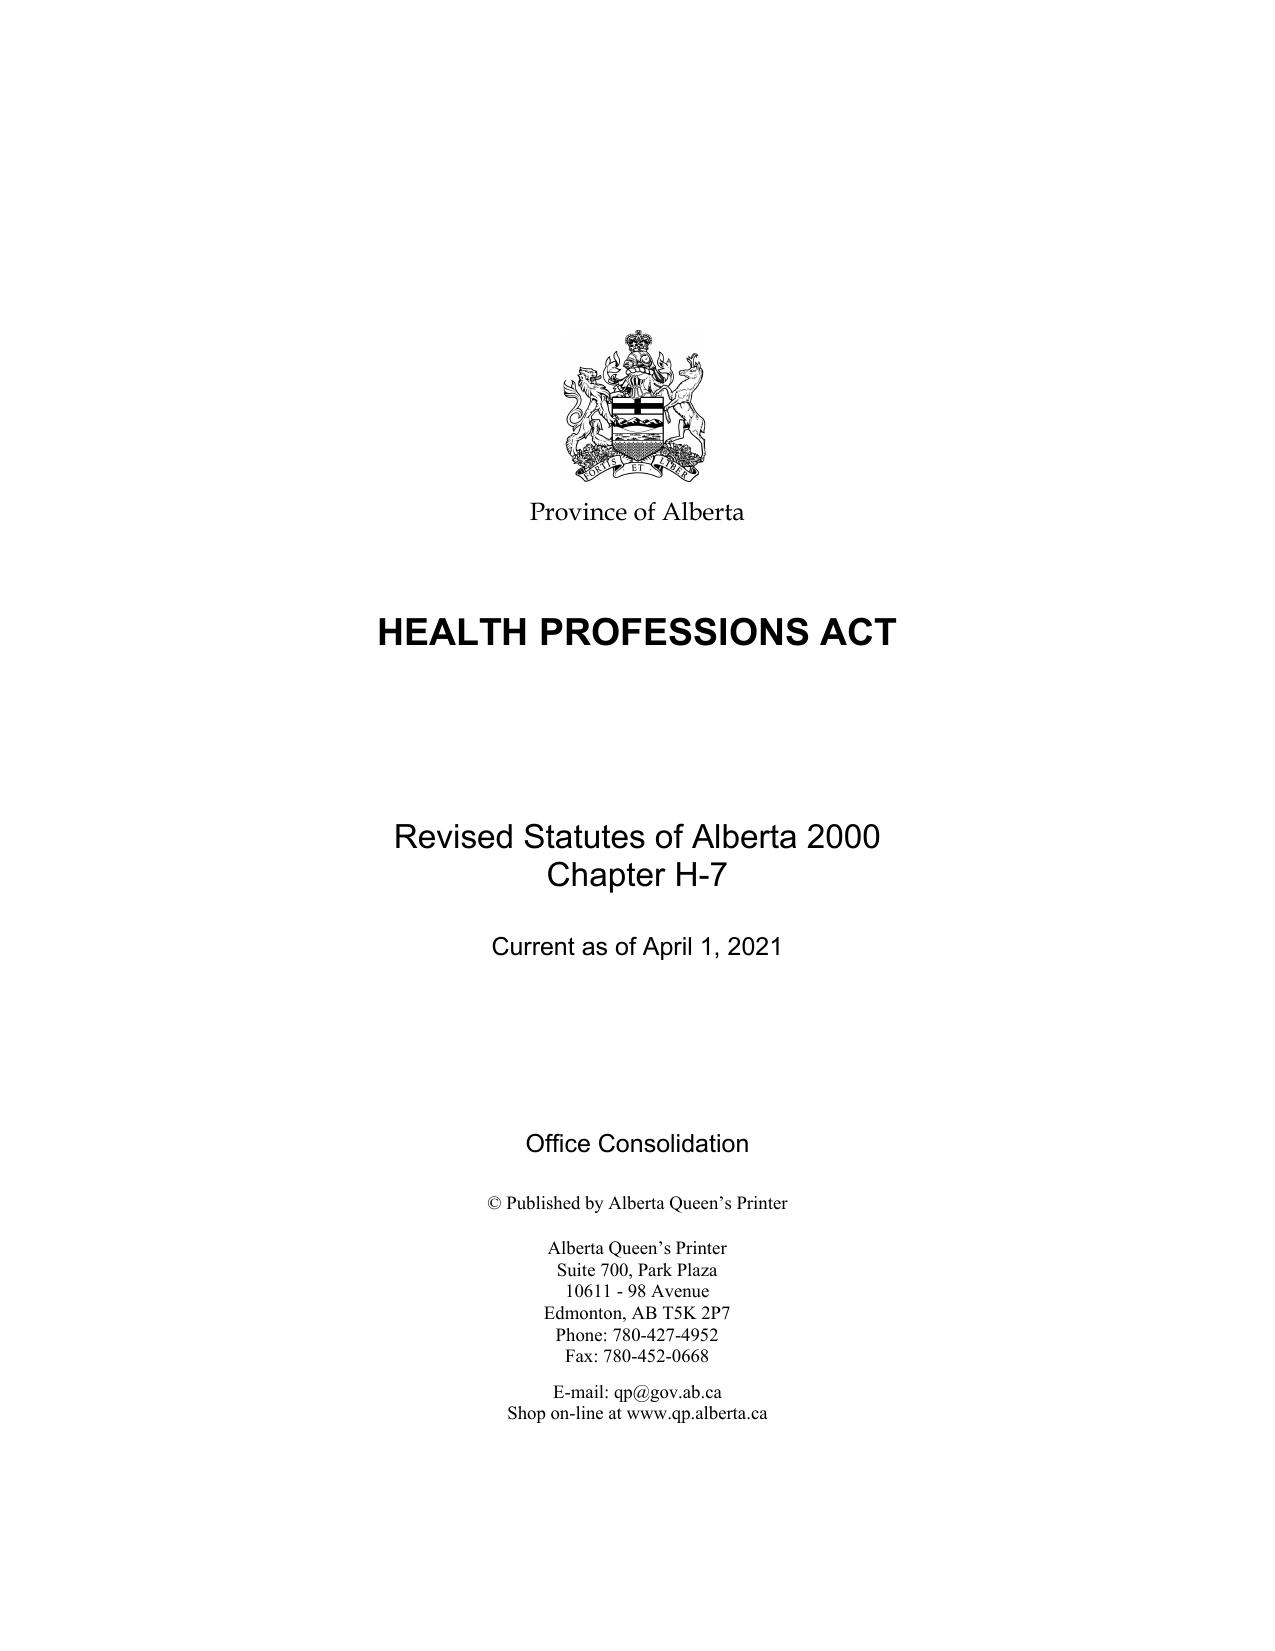 Health Profession act 2021